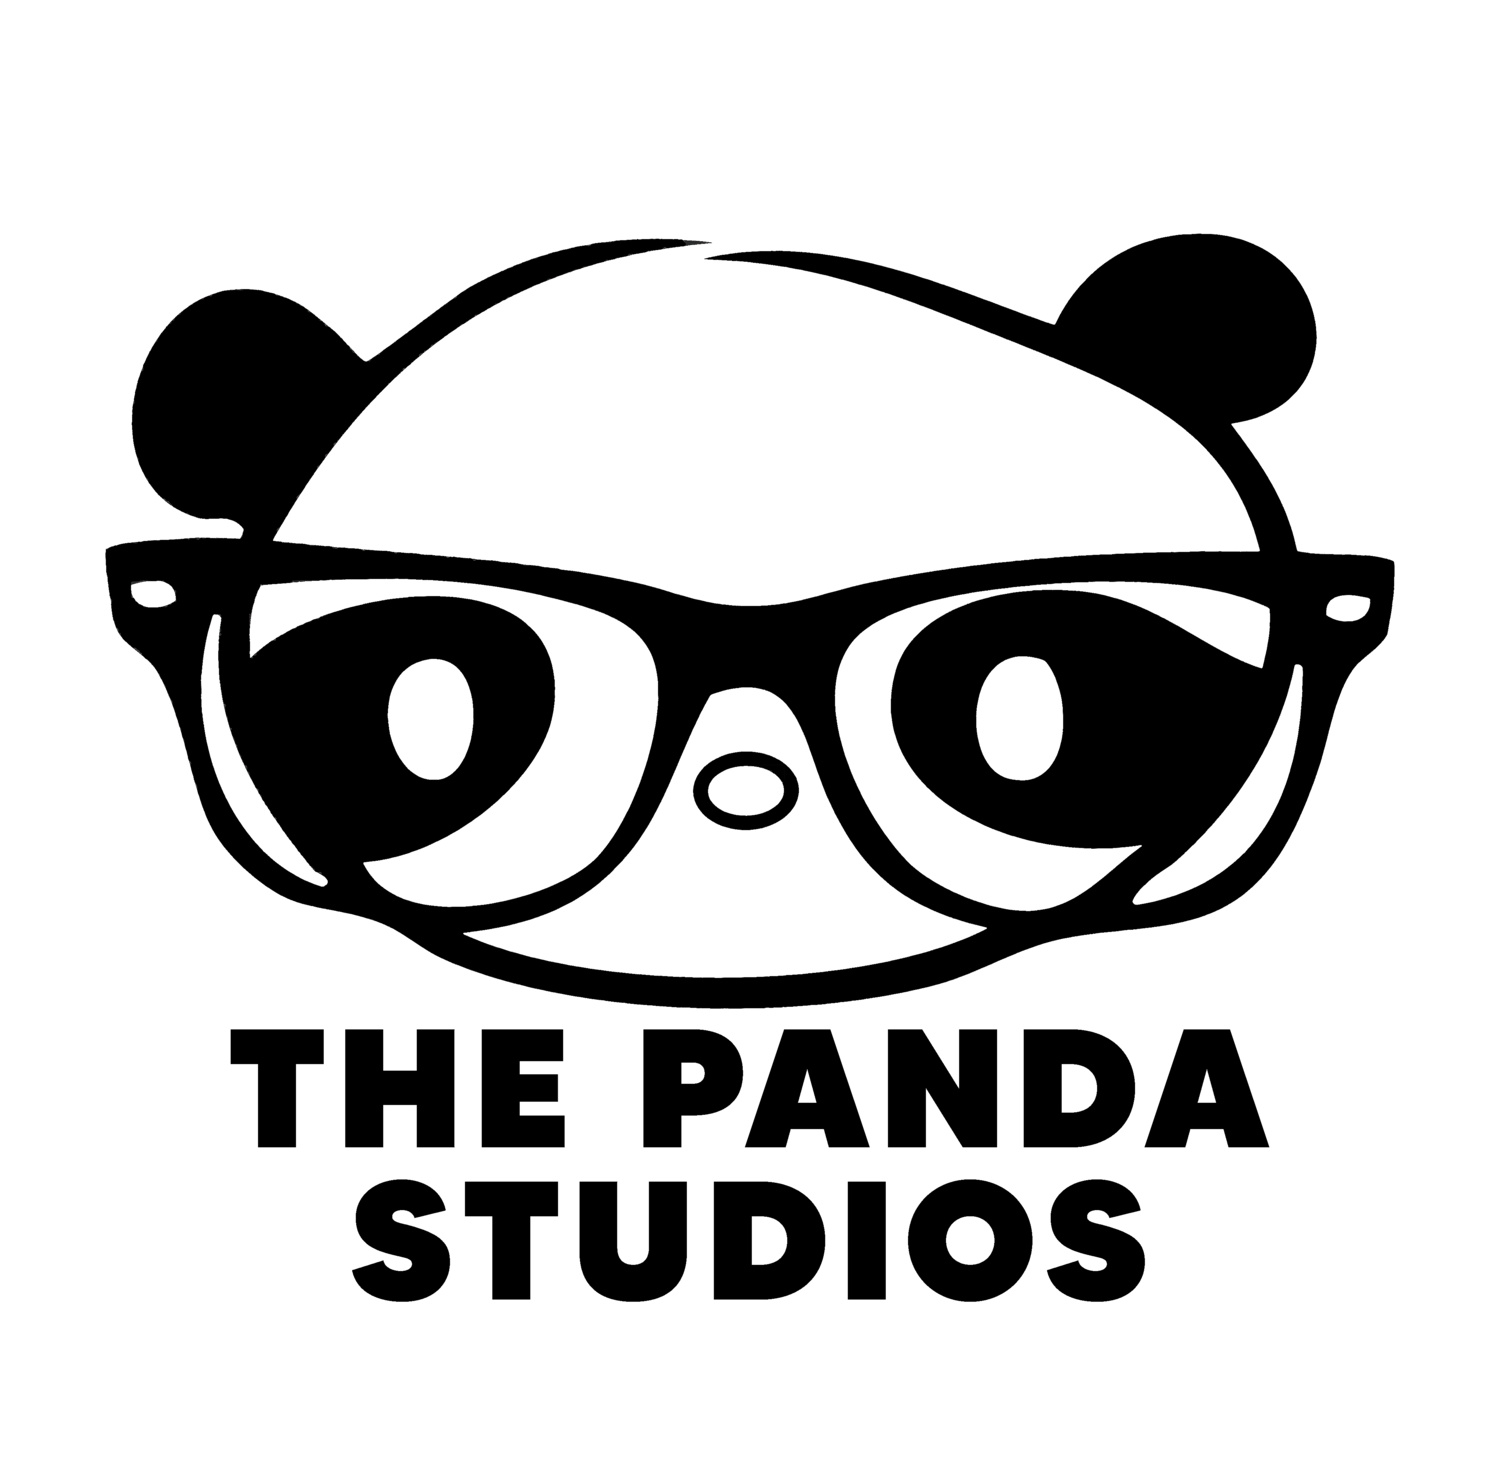 THE PANDA STUDIOS